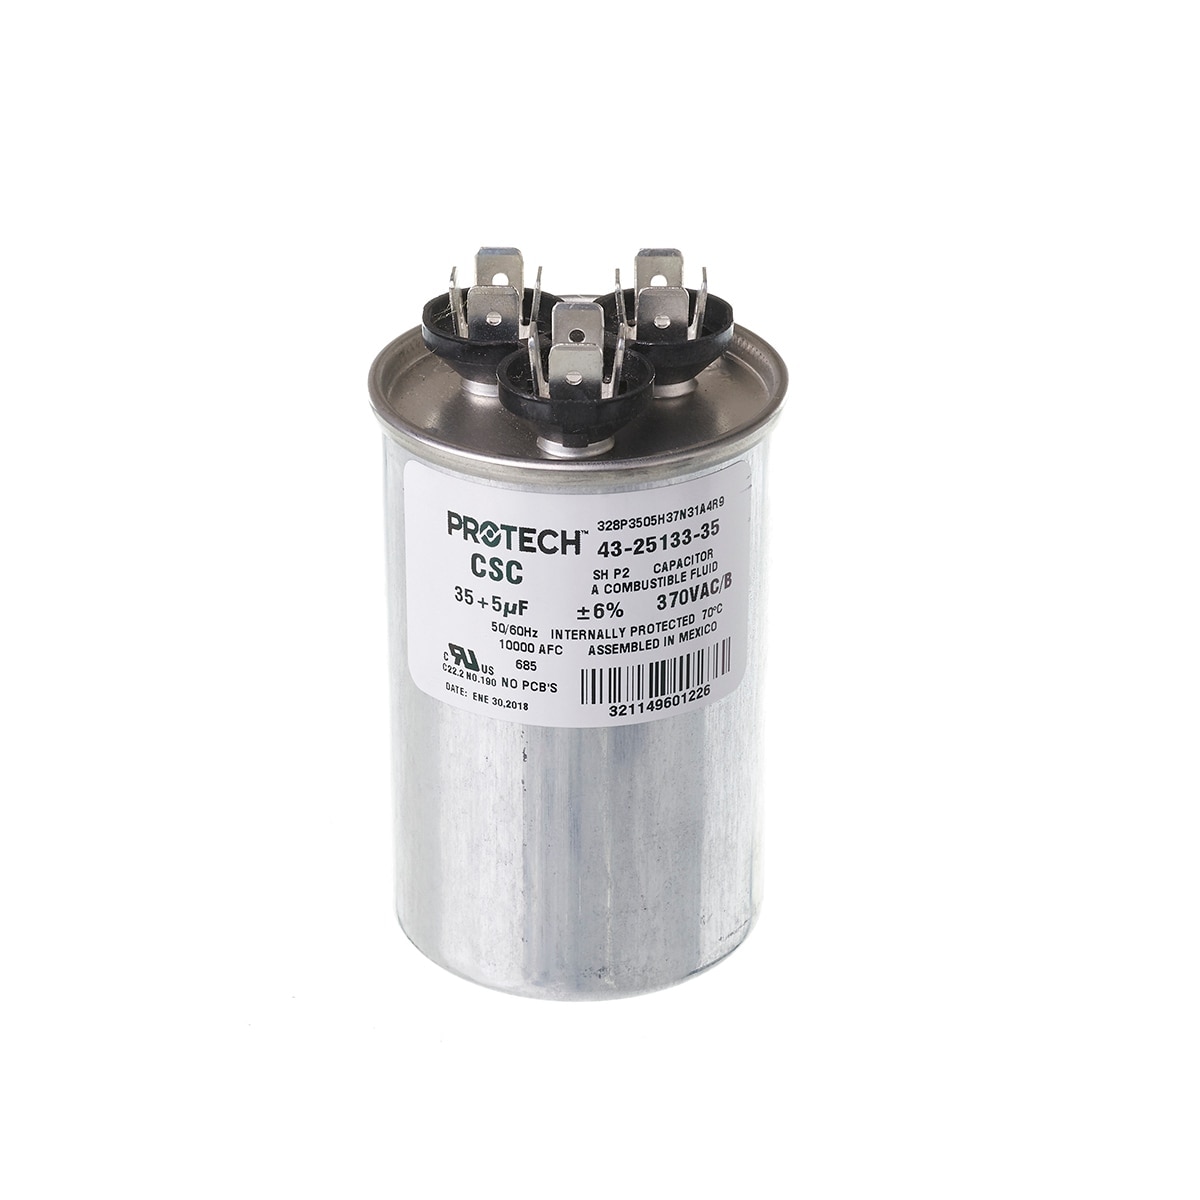 Rheem  Protech capacitor   35/3/440    43-25133-11  Dual  Round  Metal Finish 